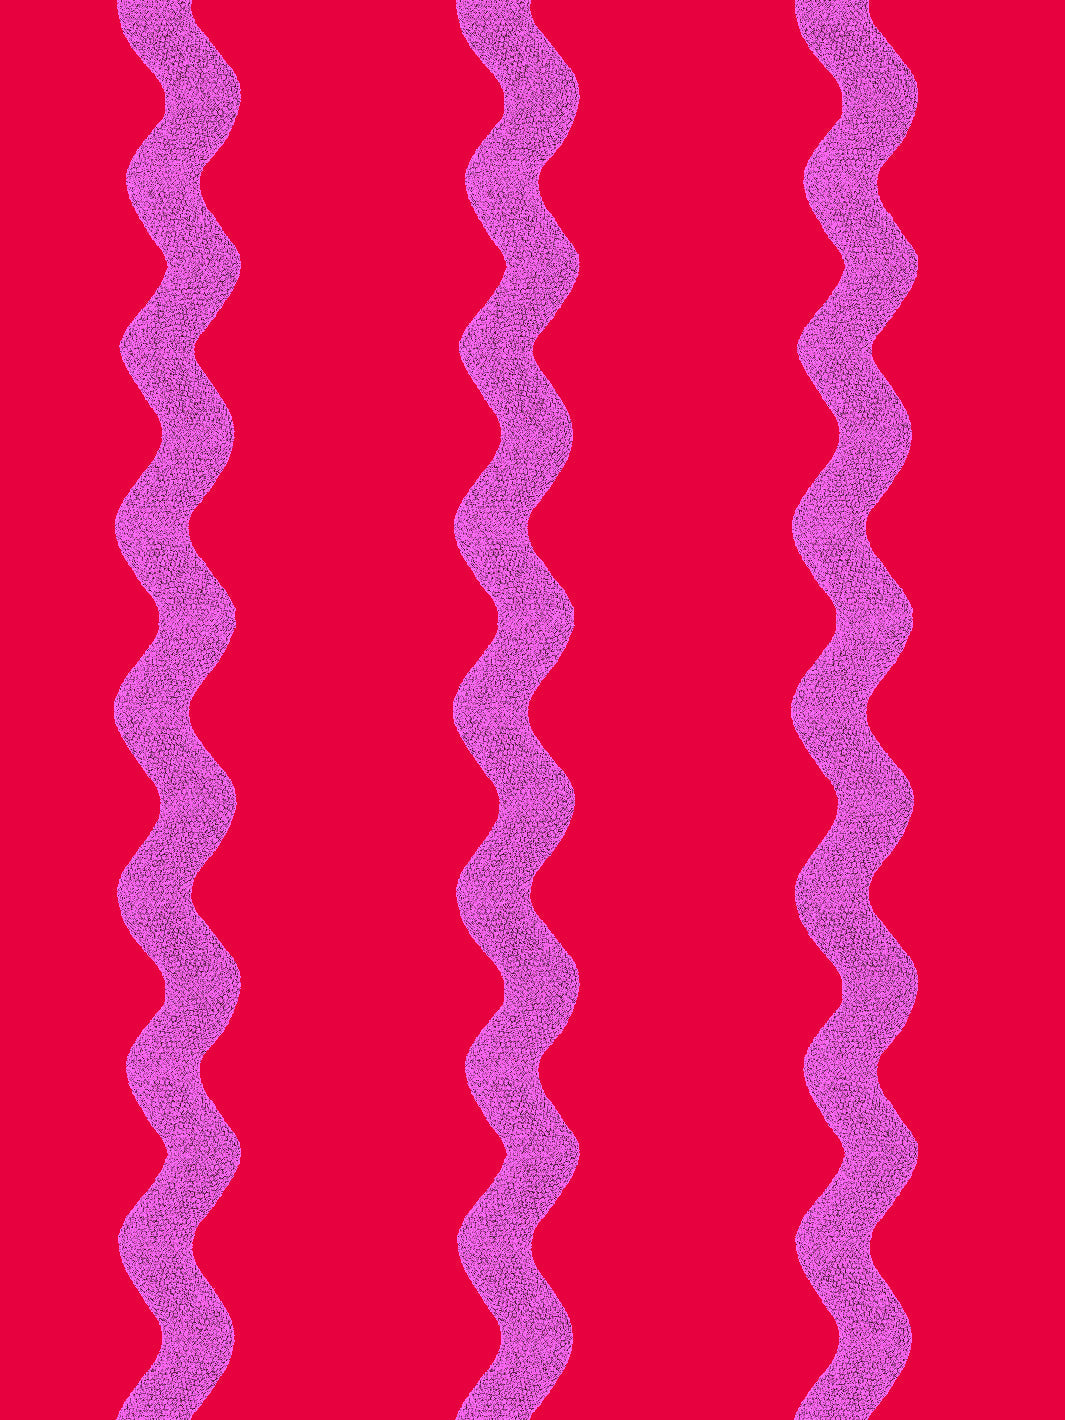 'Ric-Rac Stripe' Wallpaper by Sarah Jessica Parker - Lilac Geranium